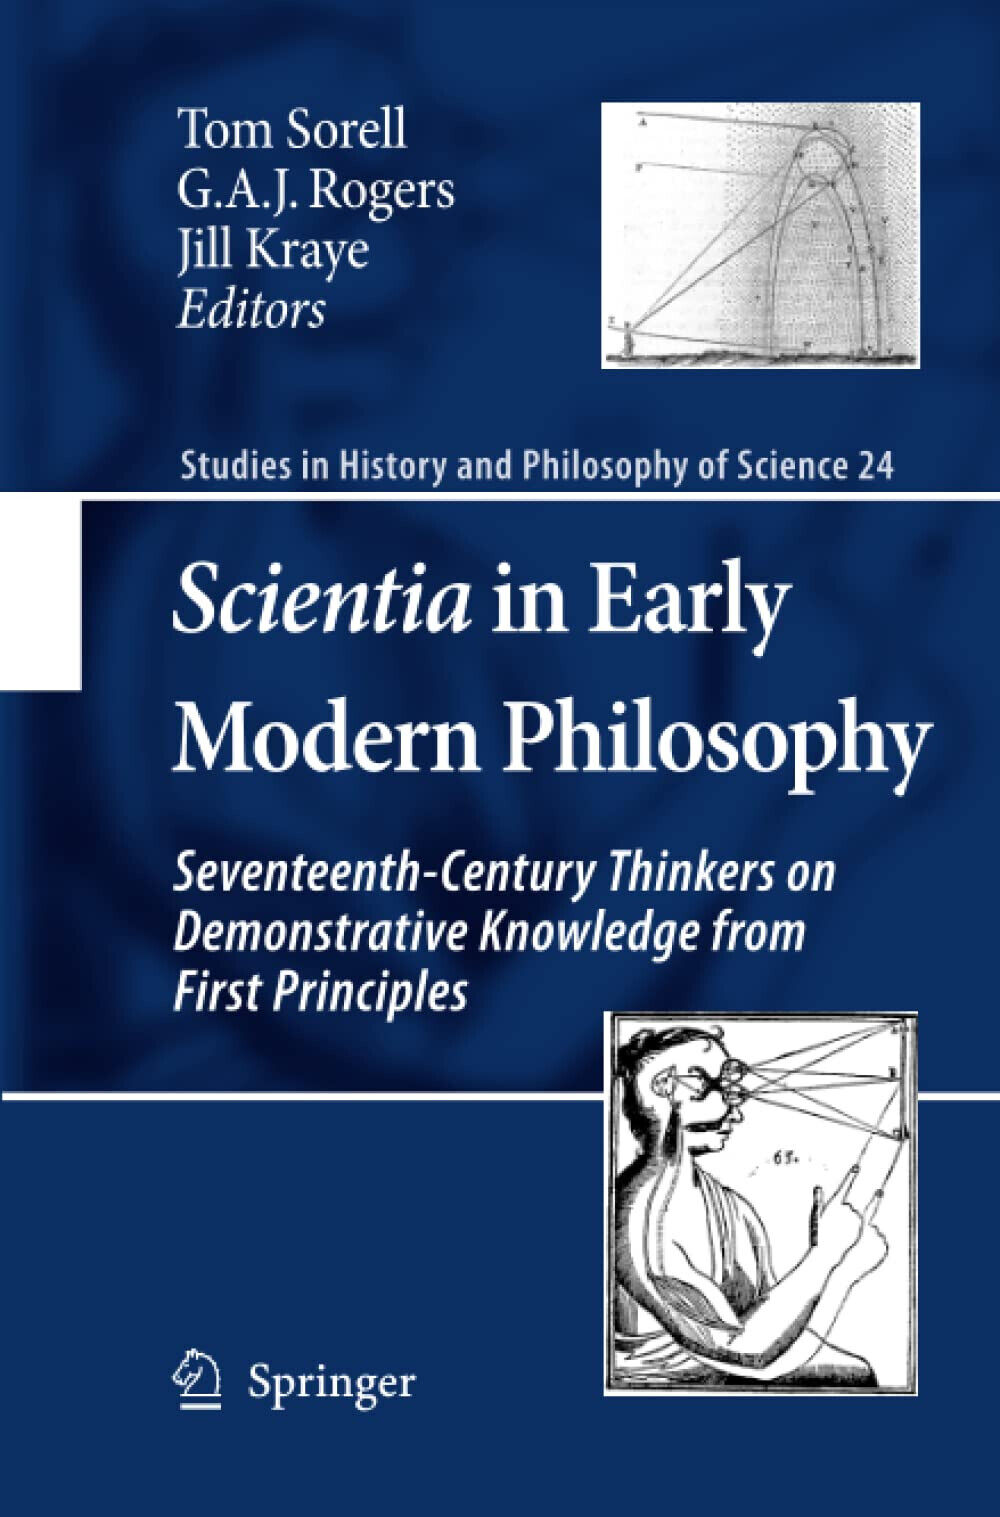 Scientia in Early Modern Philosophy - Tom Sorell - Springer, 2012